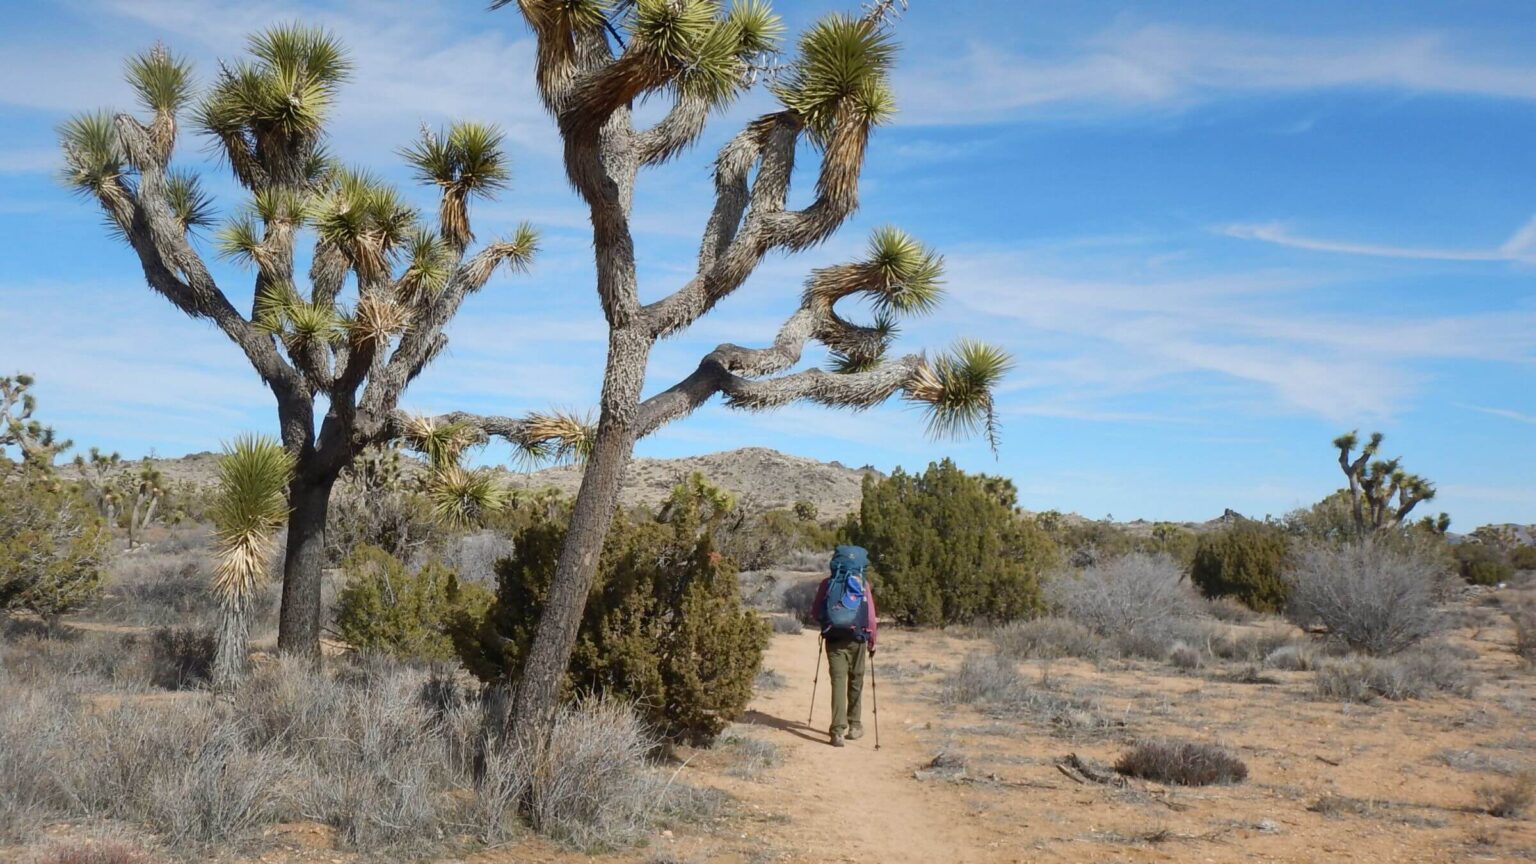 Joshua Tree Wilderness, Joshua tree (Yucca brevifolia), February